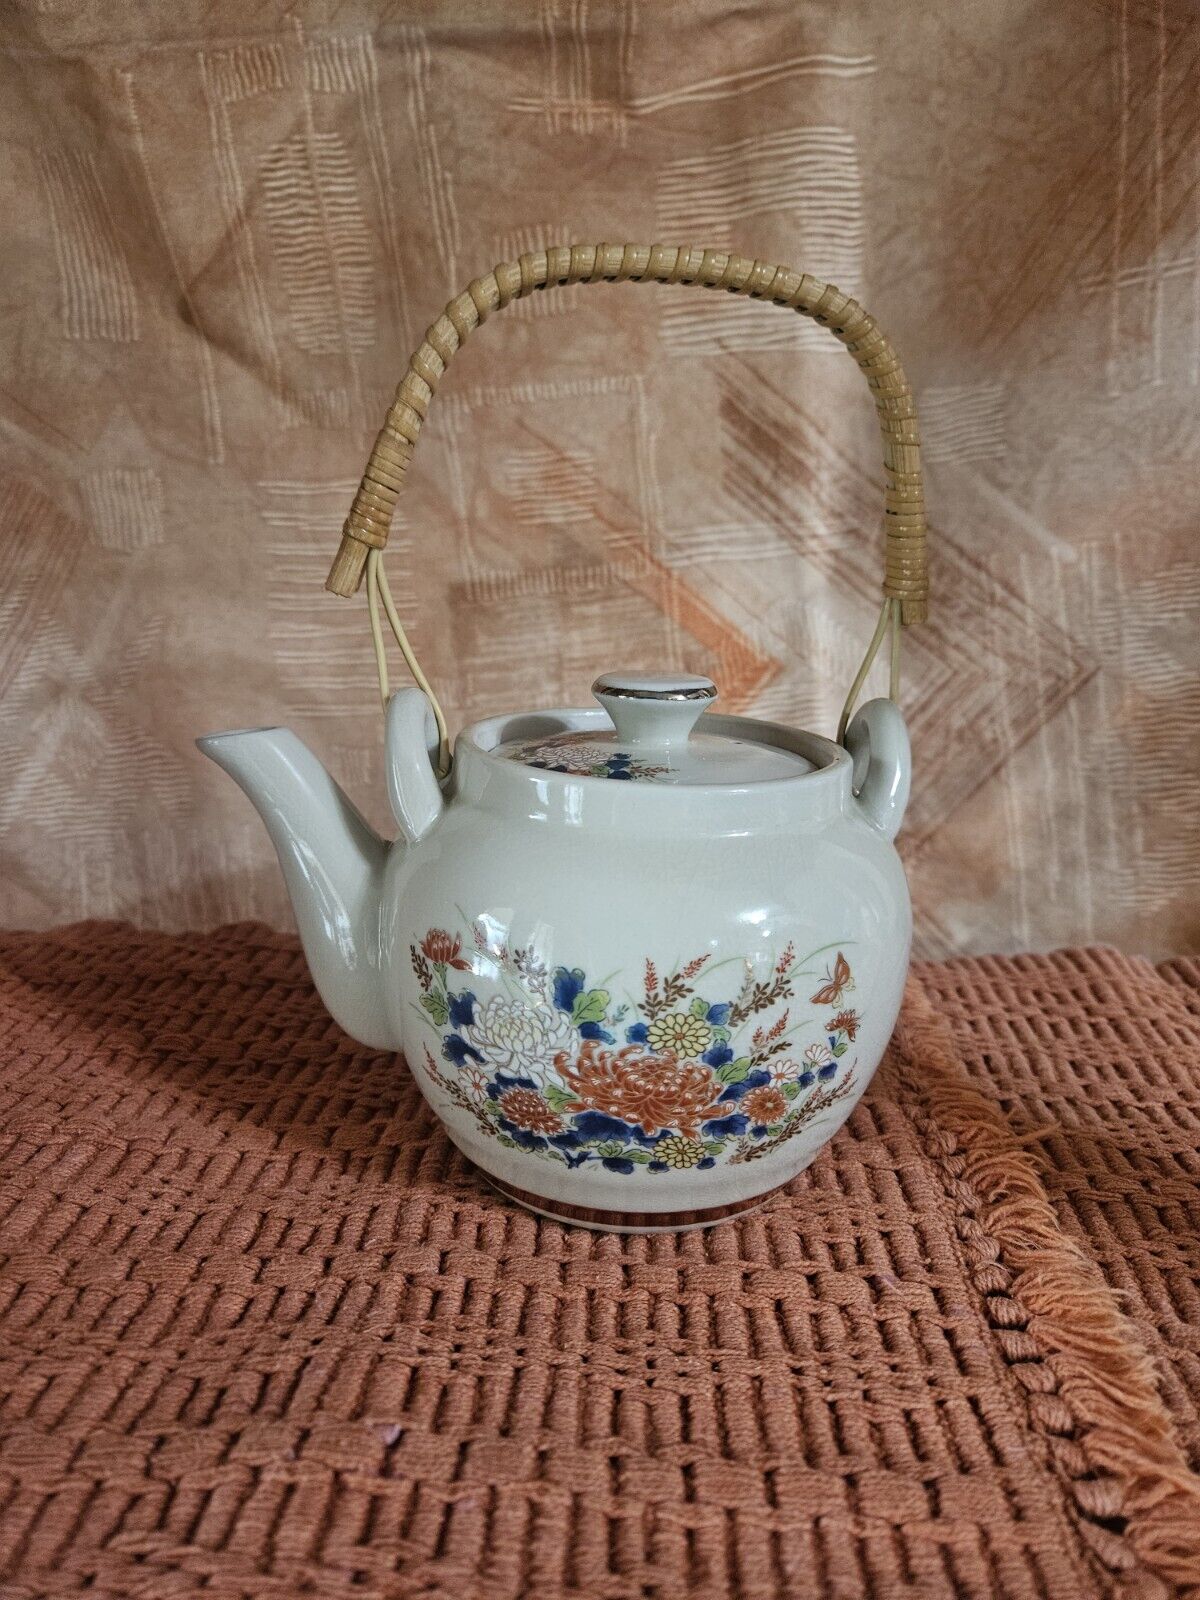 Vintage Japanese Sake Teapot, Wild Flowers, Crackle Glaze Japan. Woven Handle.